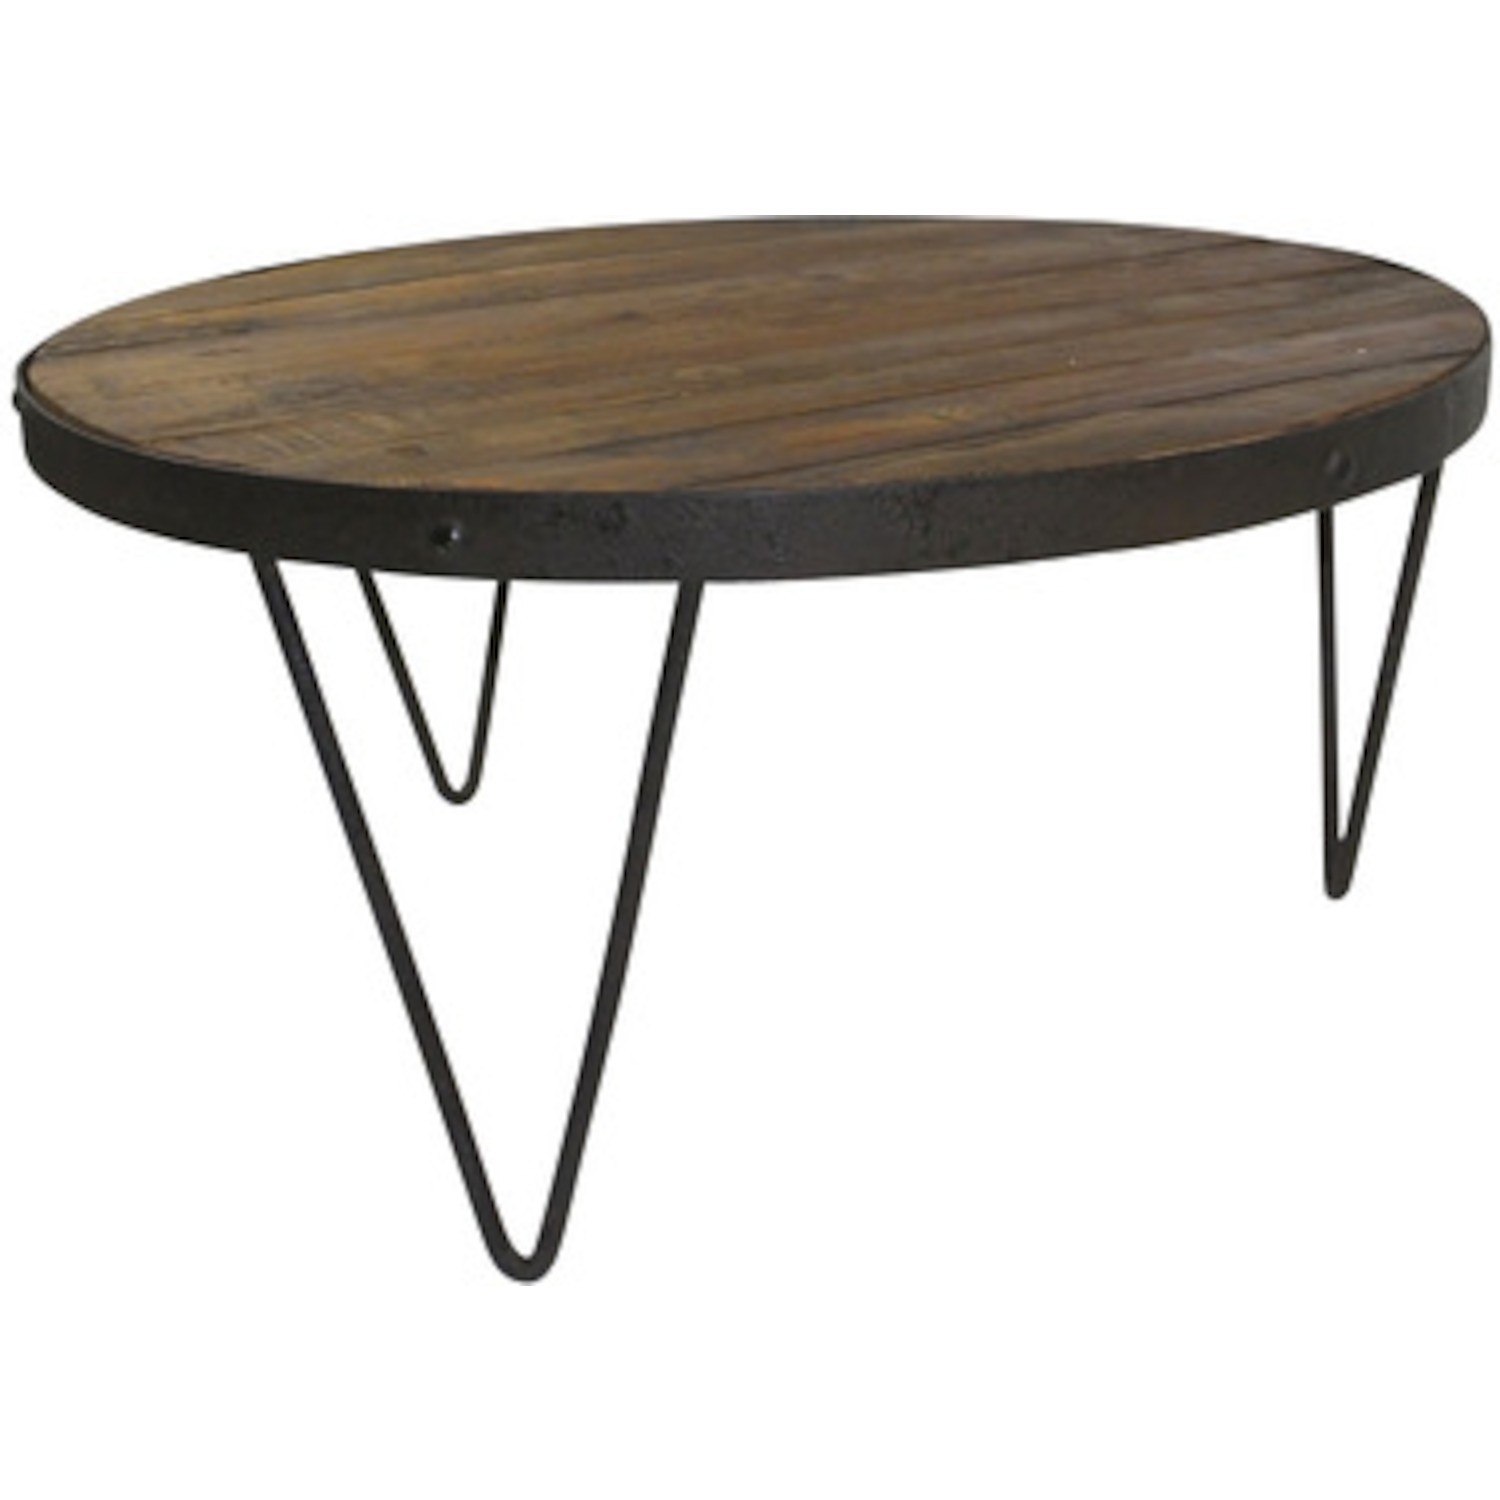 Table basse ronde en bois et metal